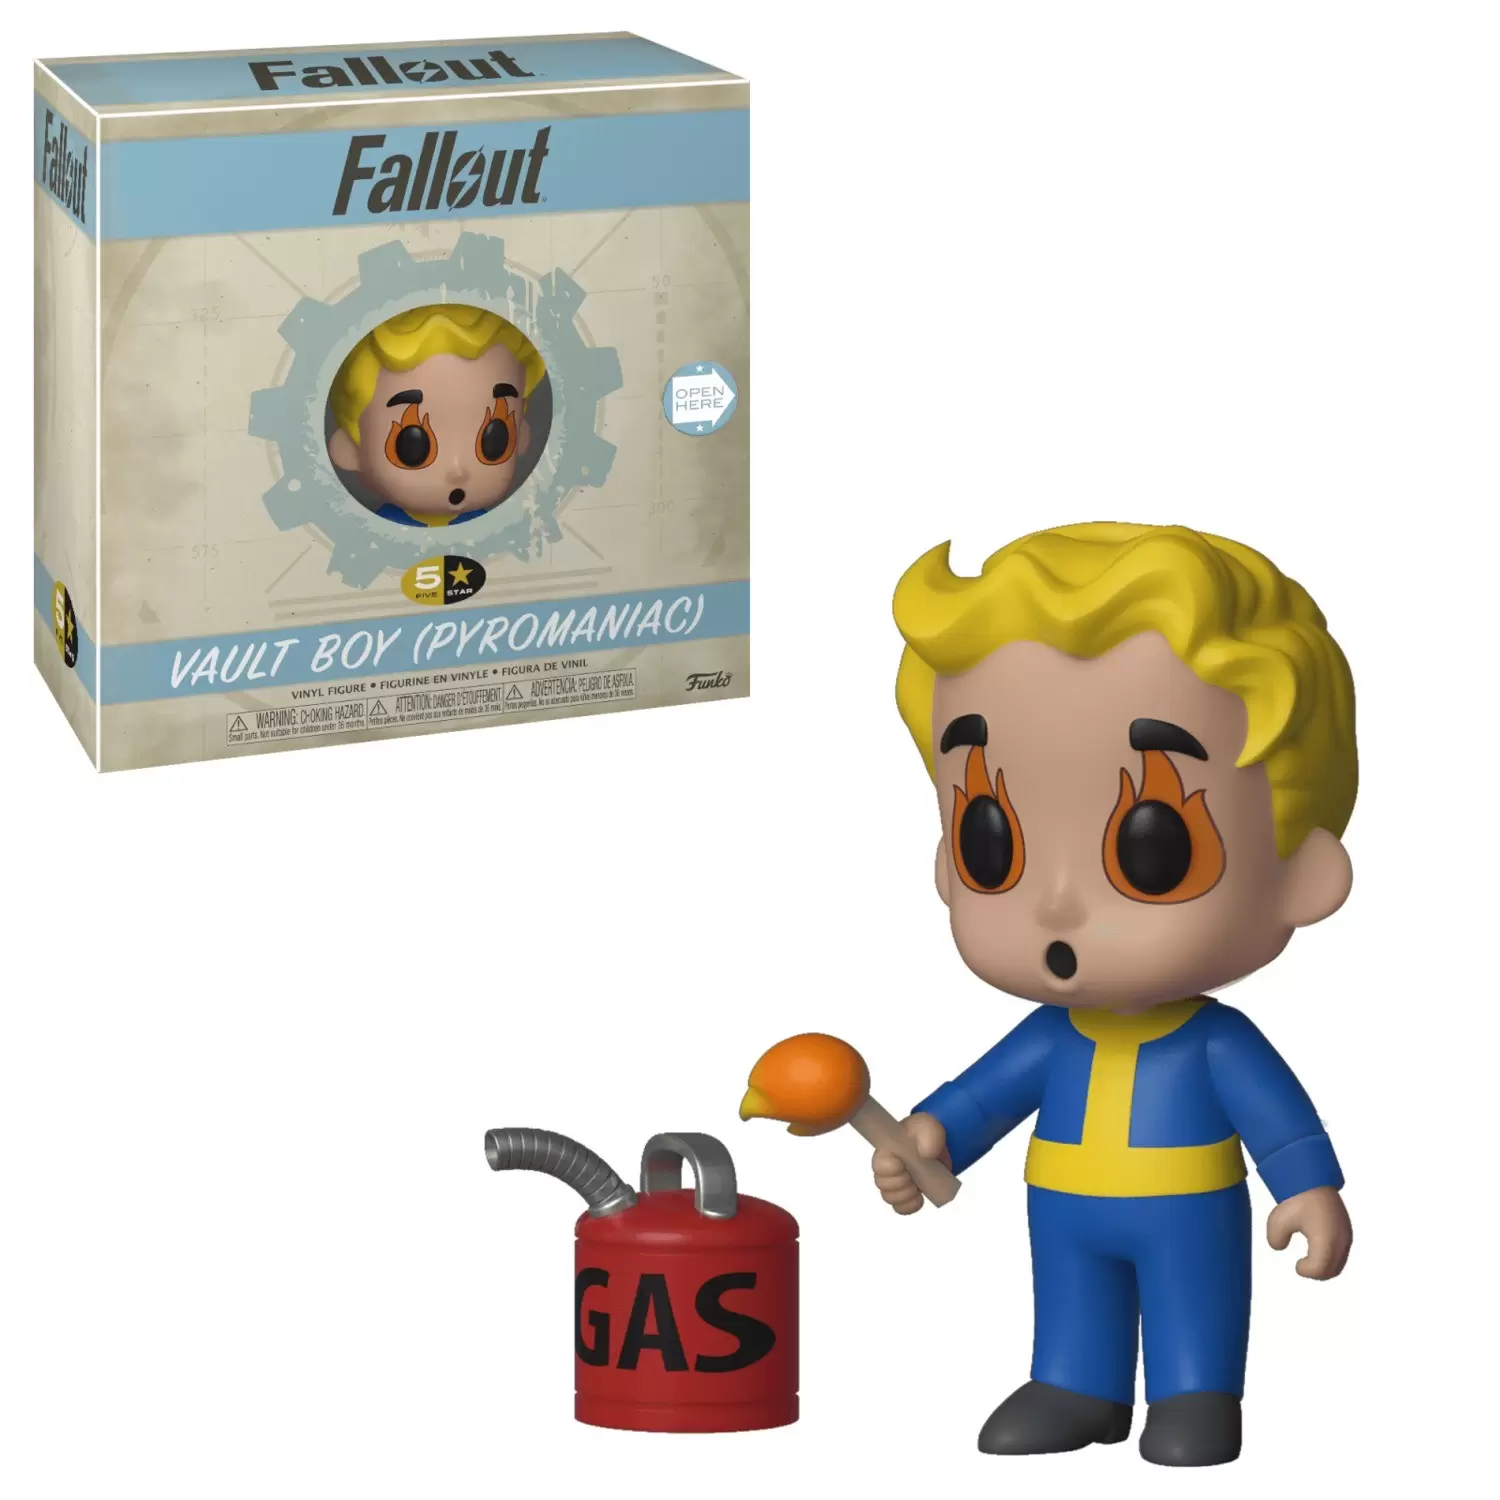 Fallout - Fallout - Vault Boy Pyromaniac